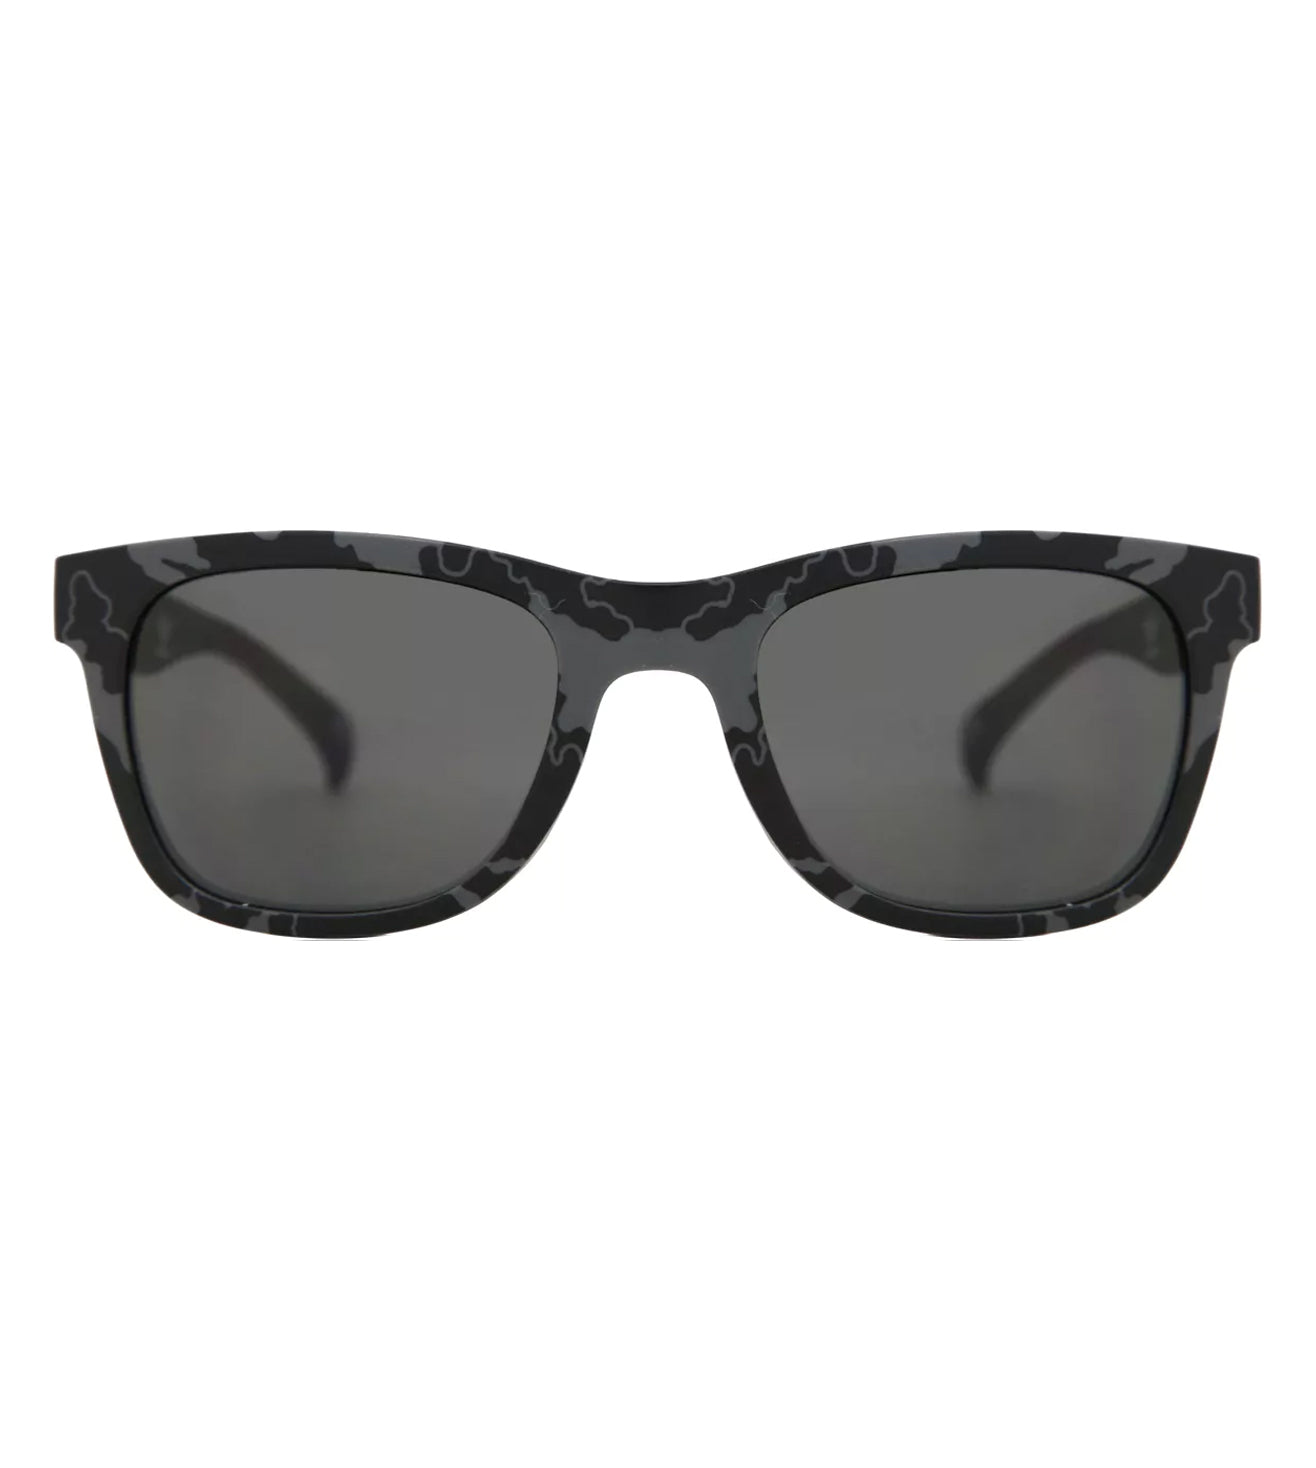 Grey Oval Unisex Sunglasses